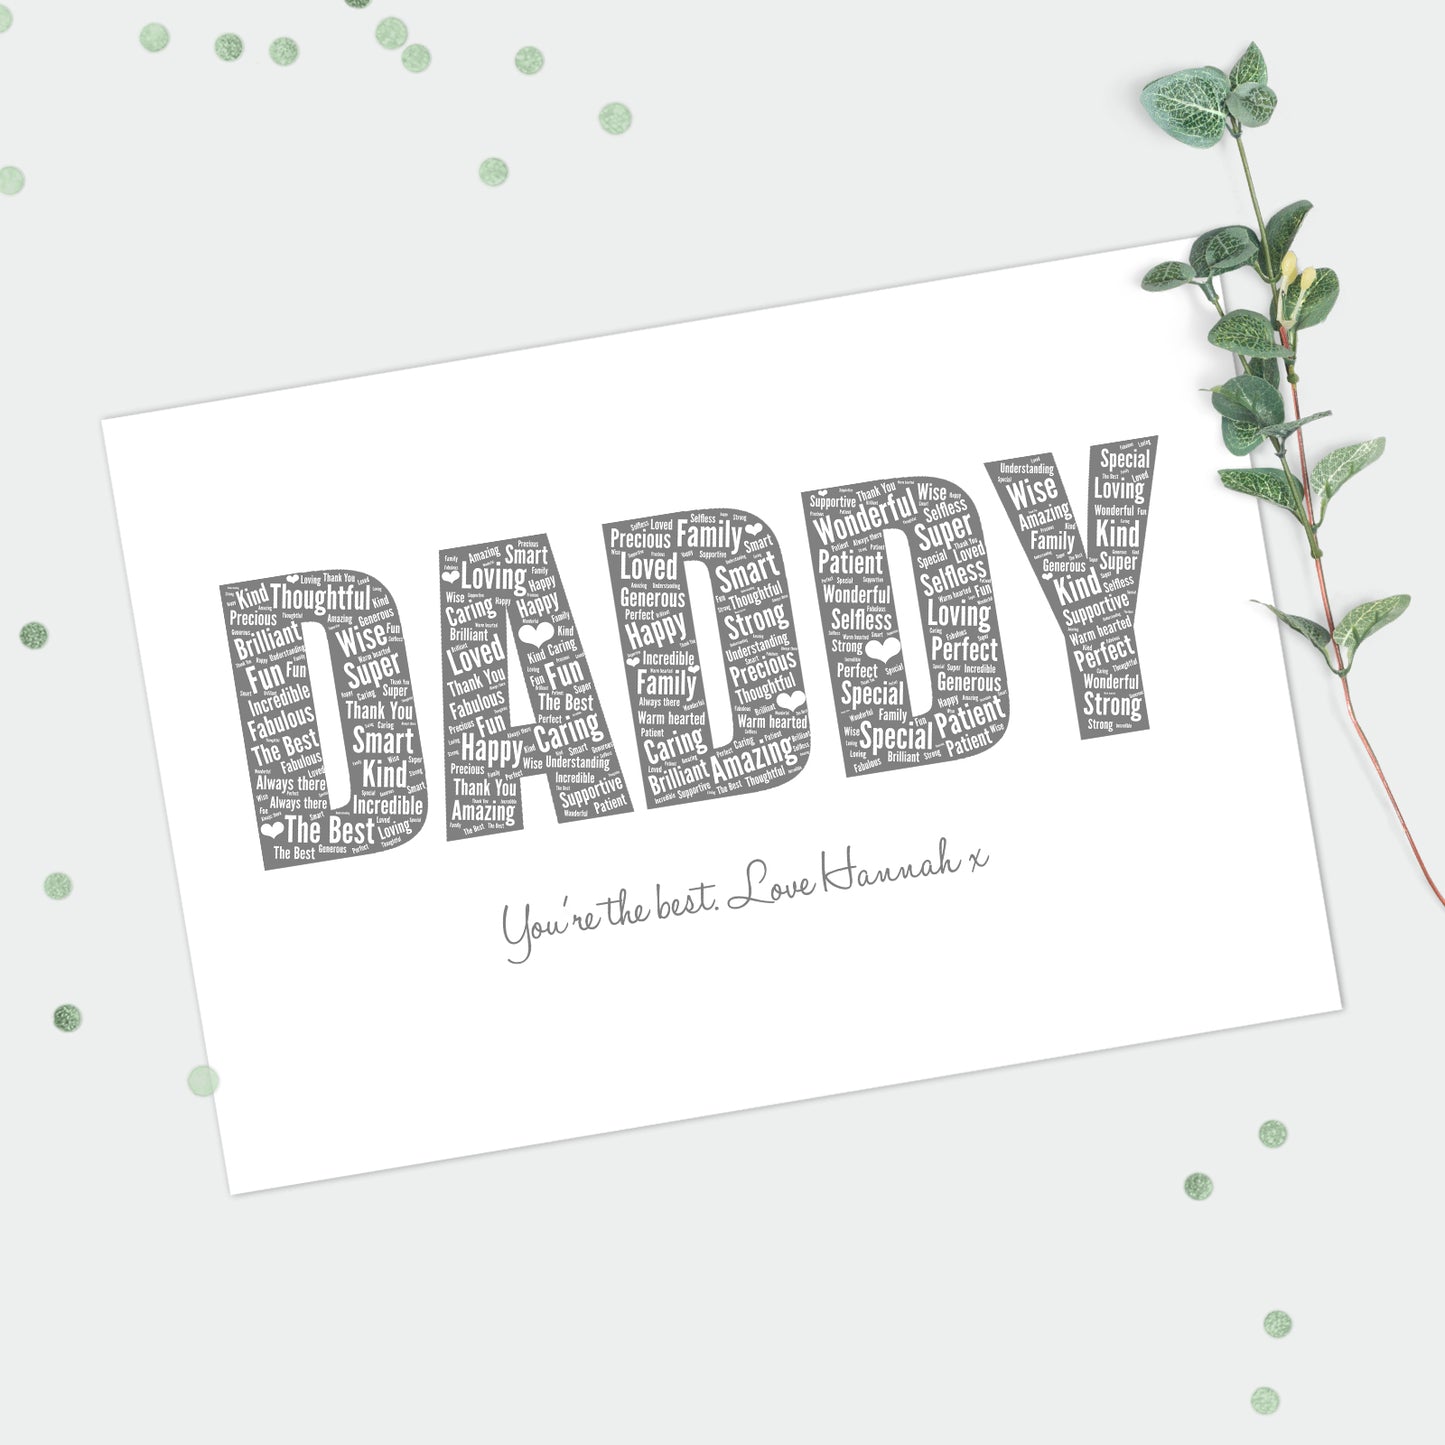 Personalised Daddy Word Art Print